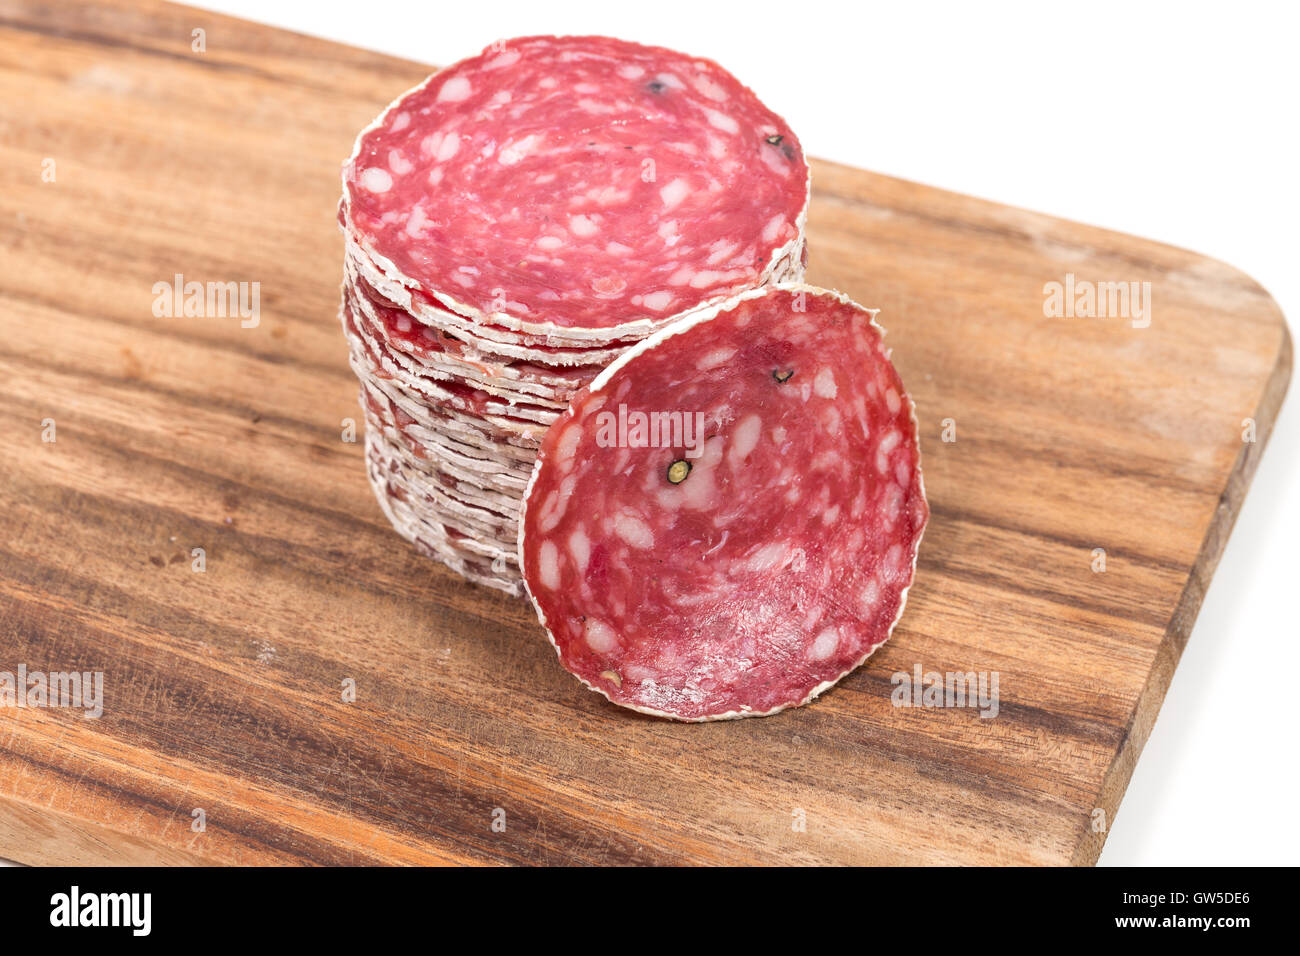 Salami slicing hi-res stock photography and images - Alamy